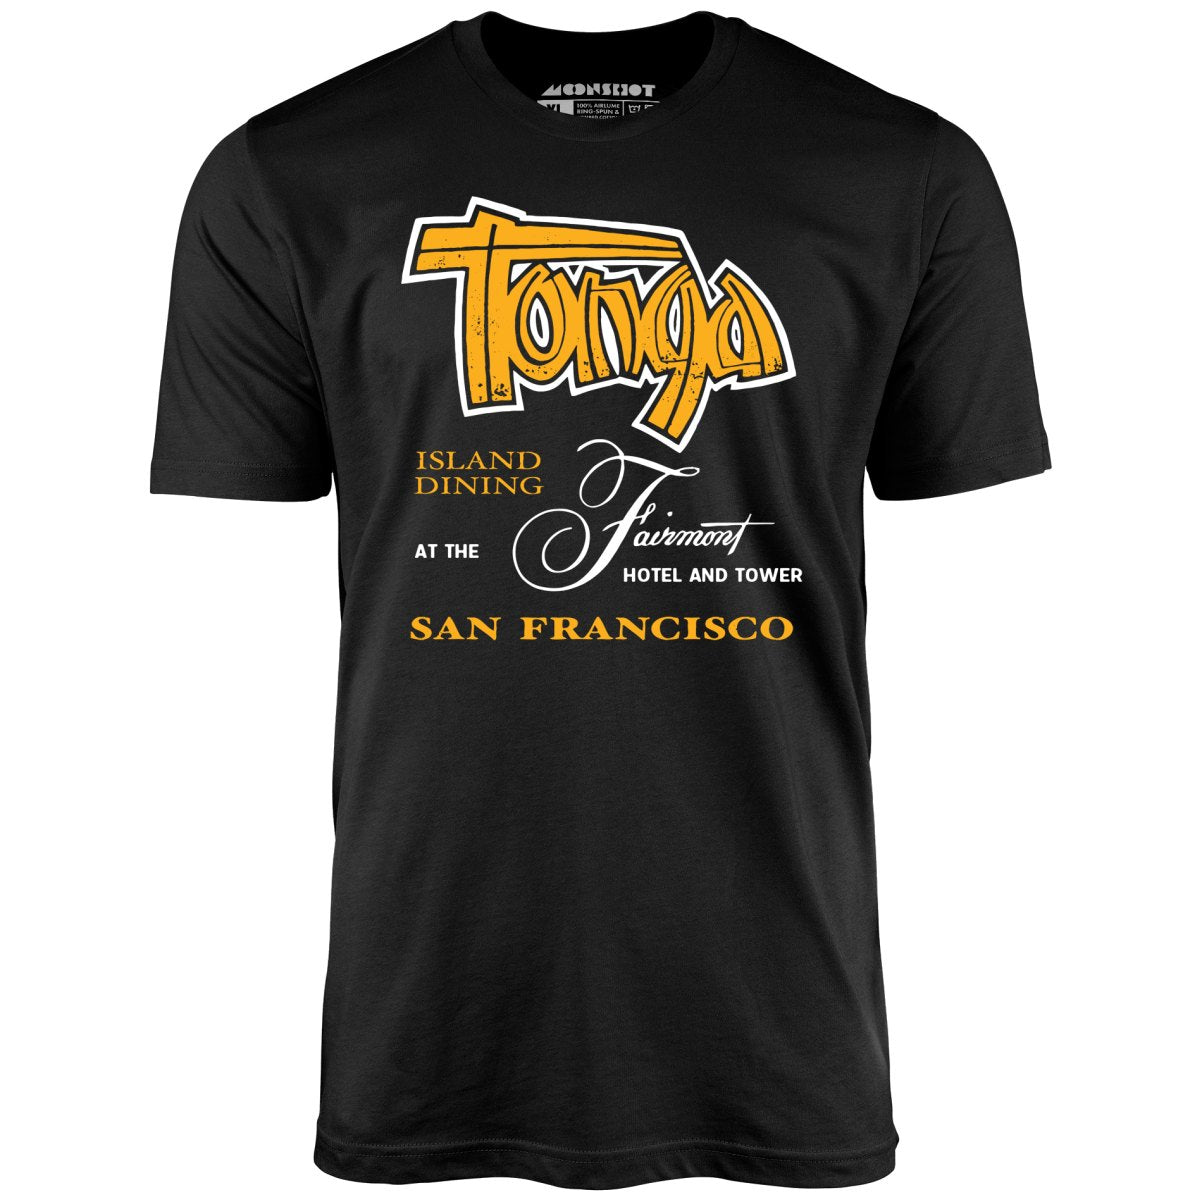 Tonga Room v3 - San Francisco, CA - Vintage Tiki Bar - Unisex T-Shirt